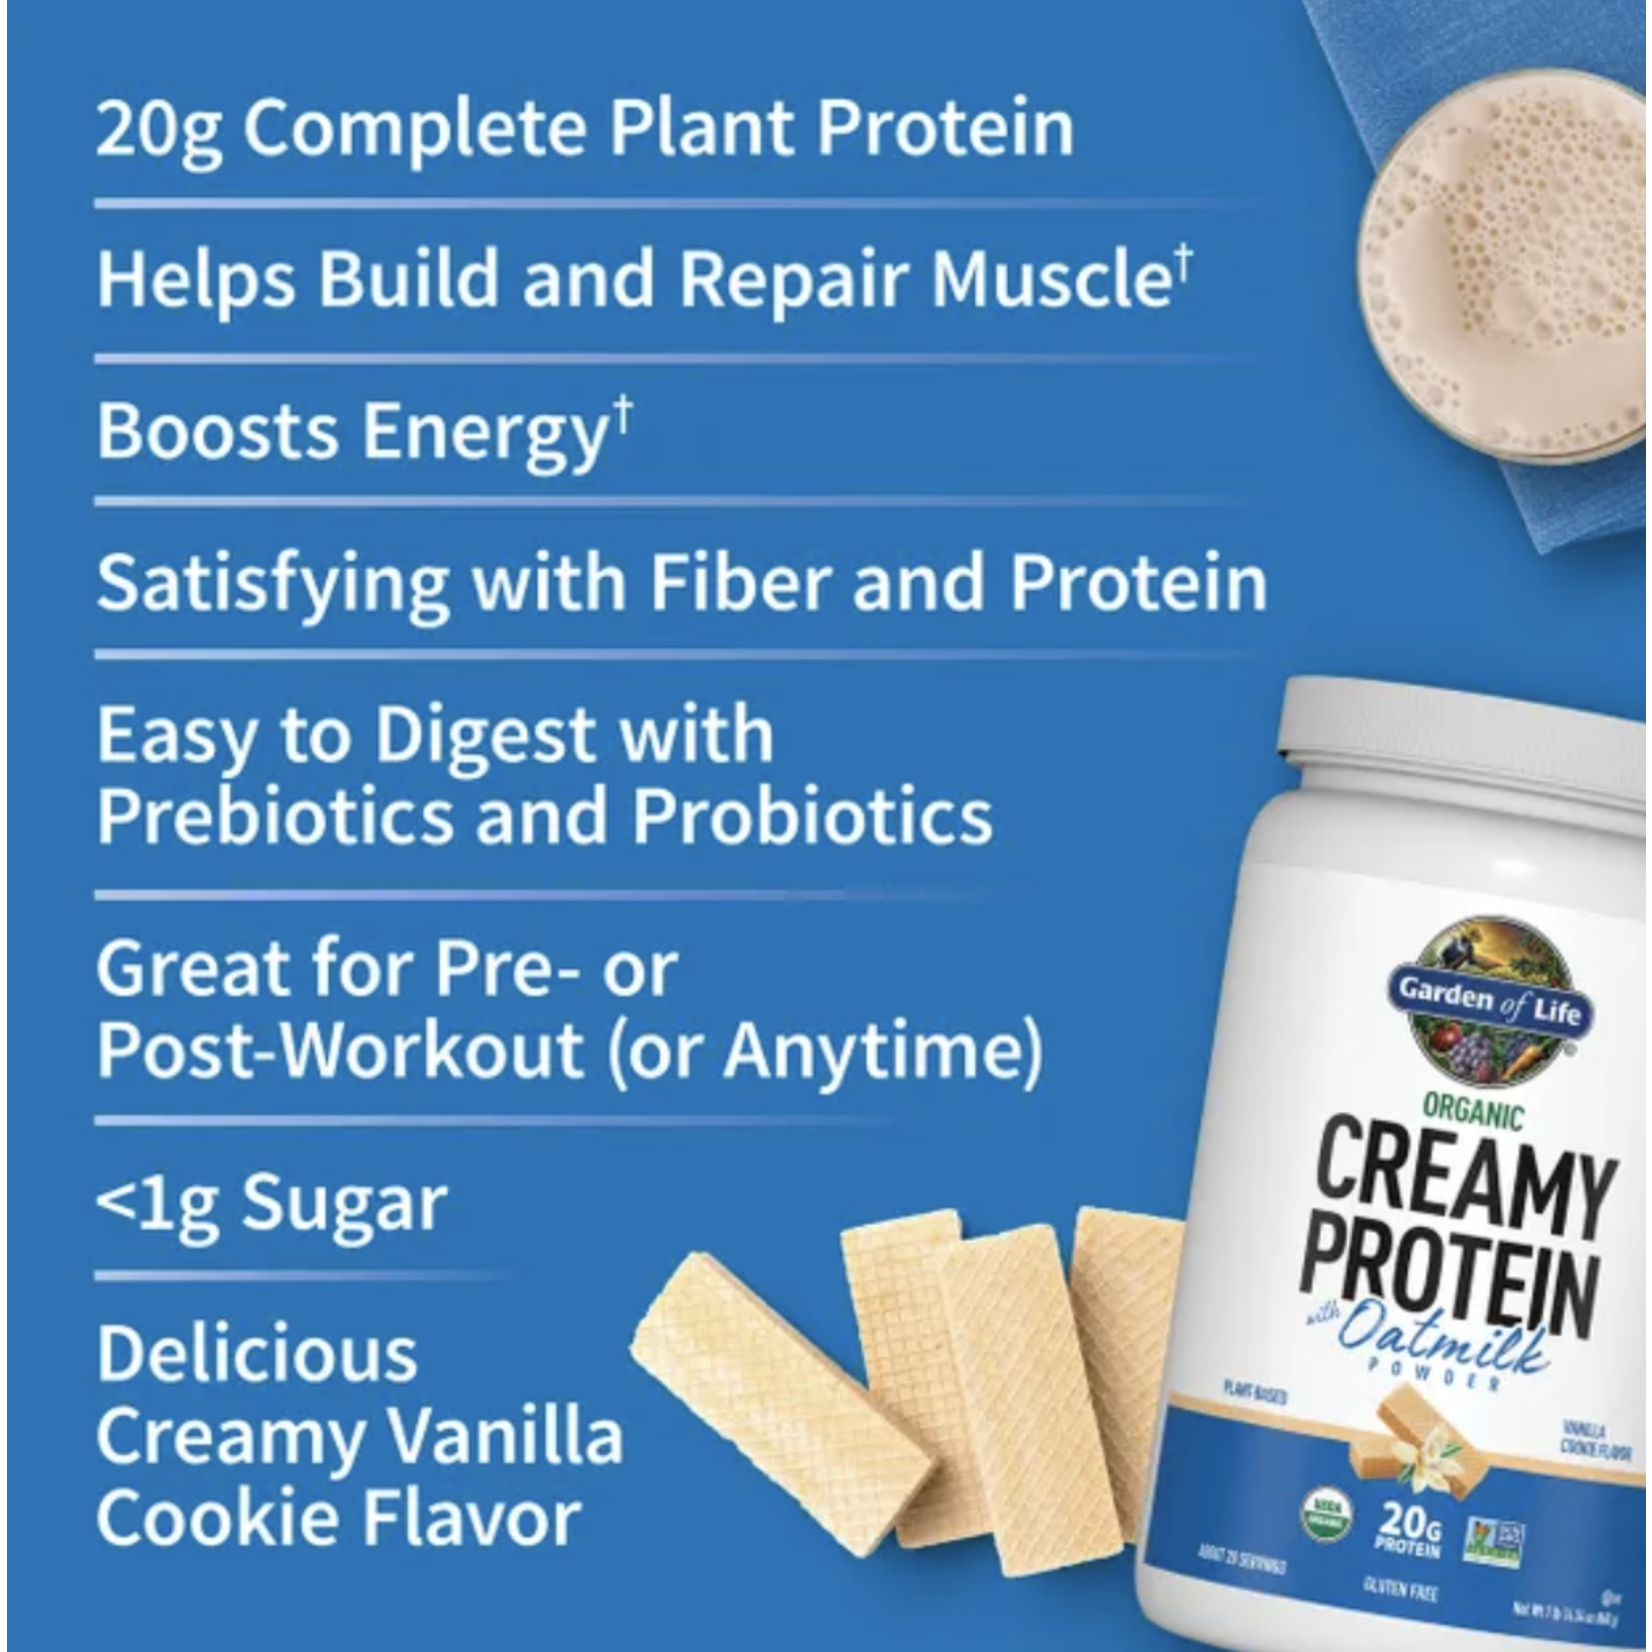 Garden of Life Garden of Life - Organic Creamy Protein Vanilla Cookie - 860 g